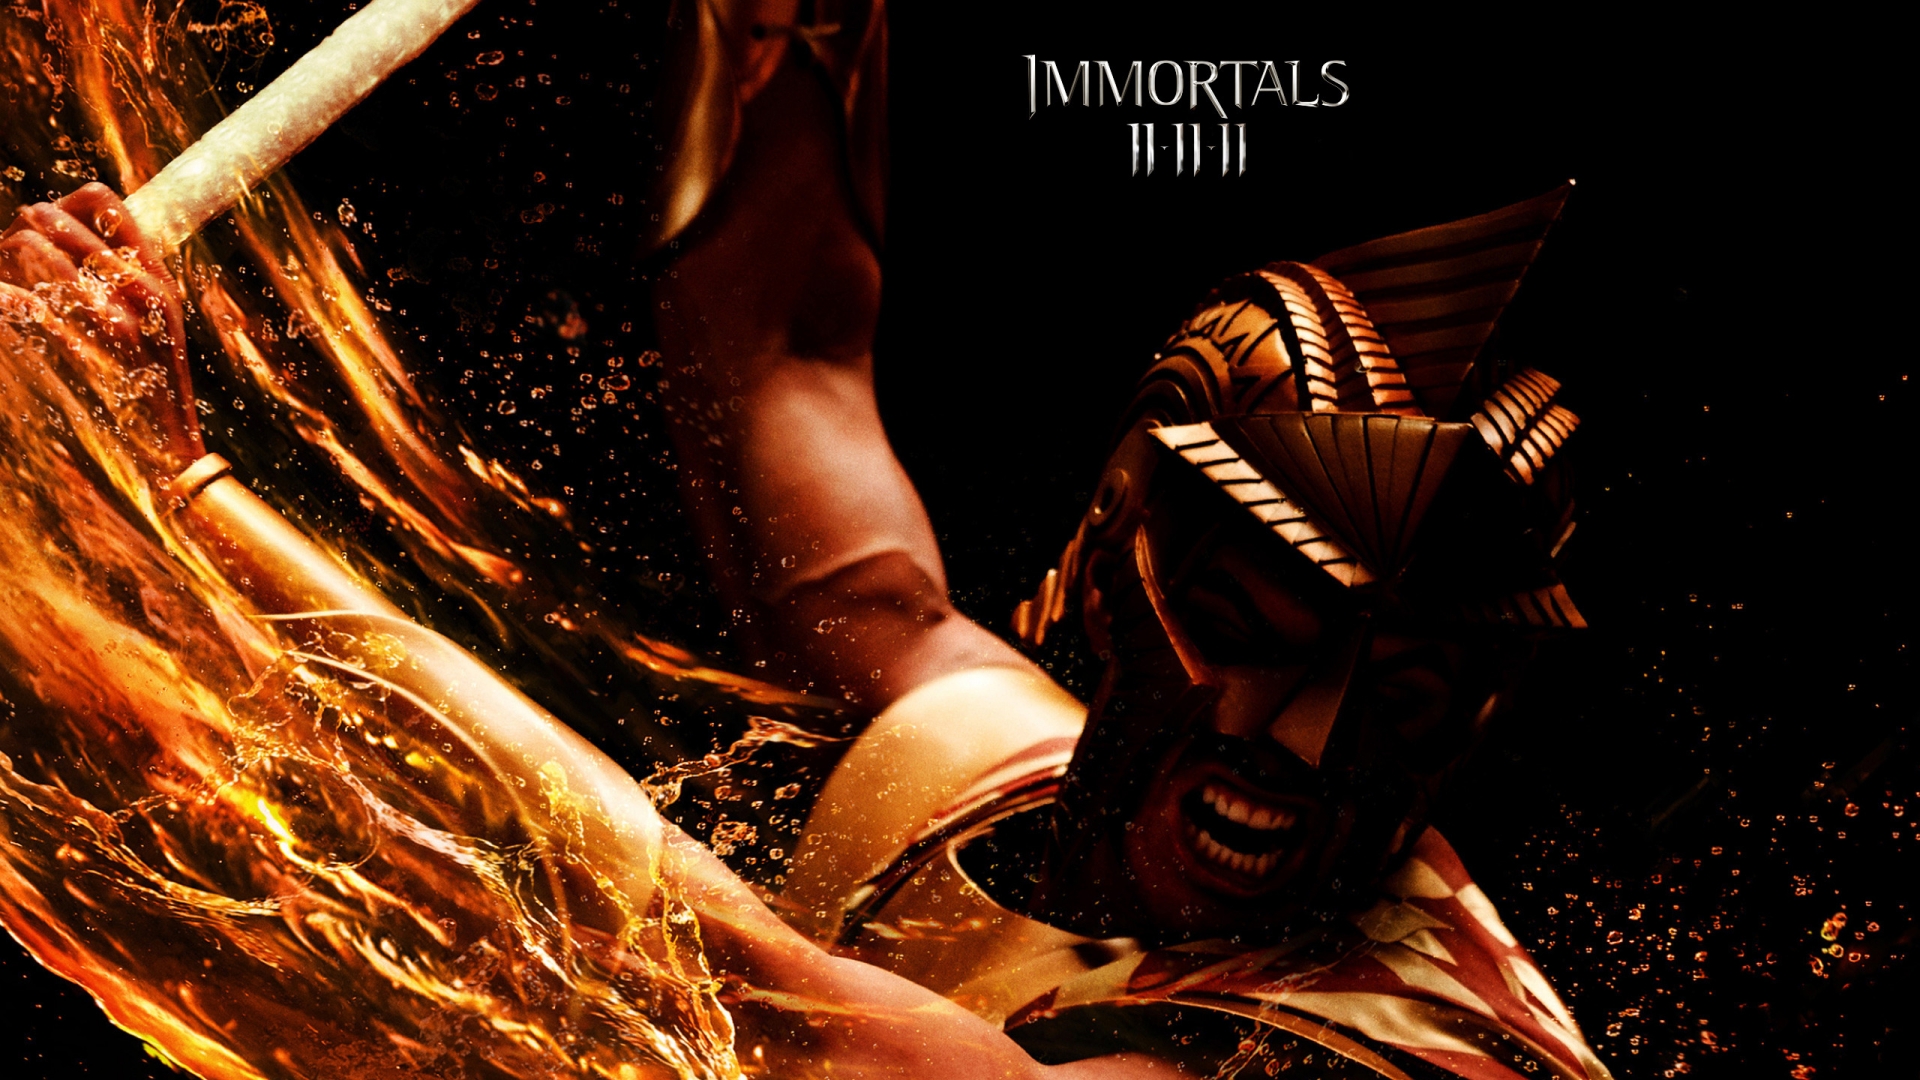 Immortals 2011 Movie for 1920 x 1080 HDTV 1080p resolution